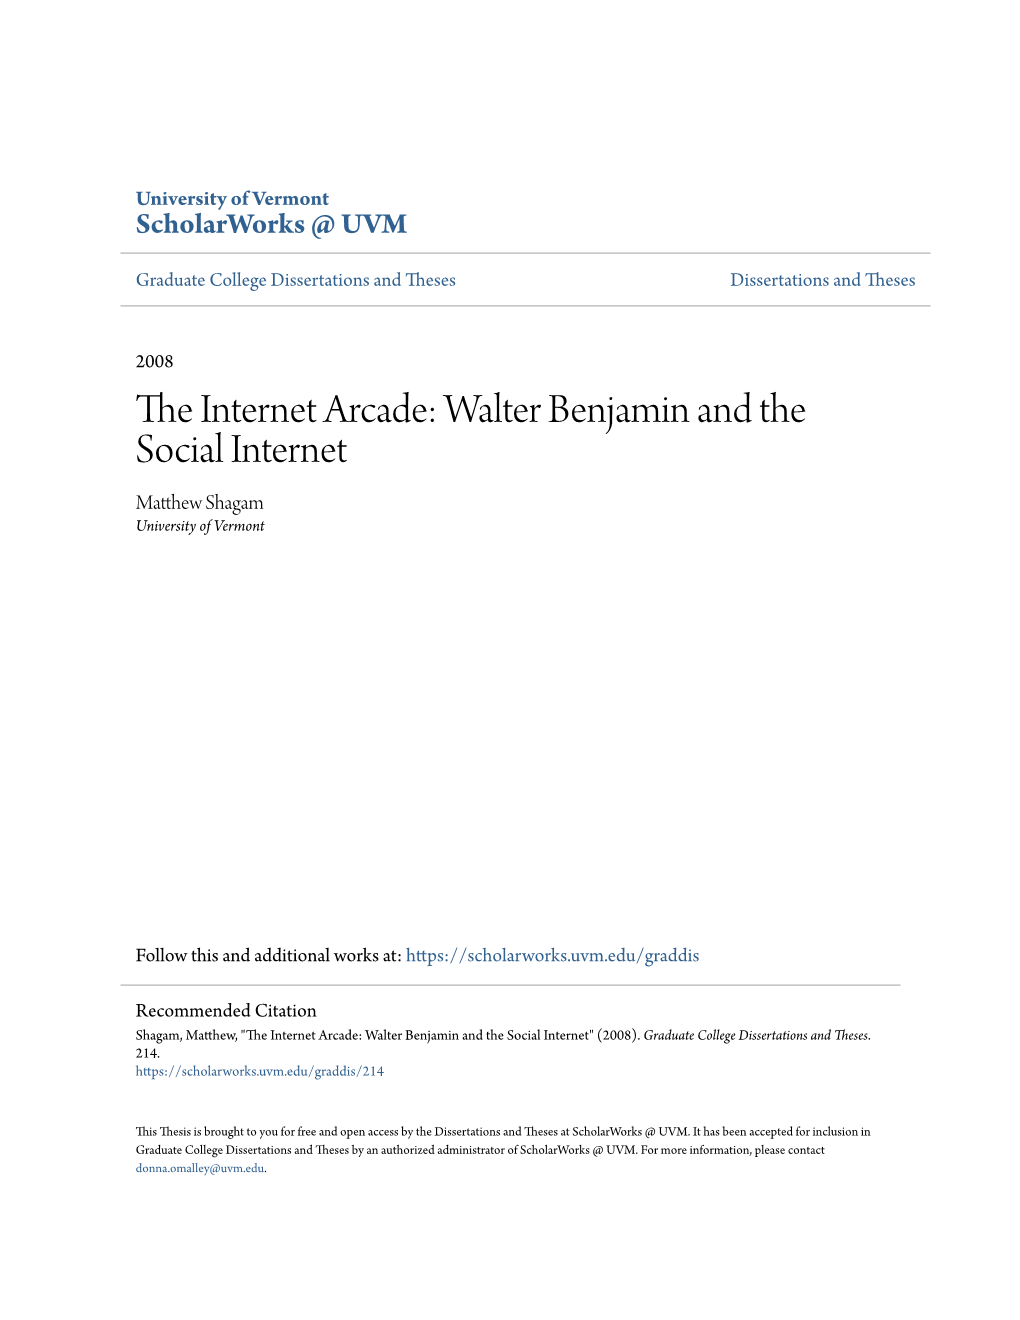 Walter Benjamin and the Social Internet Matthew Hs Agam University of Vermont